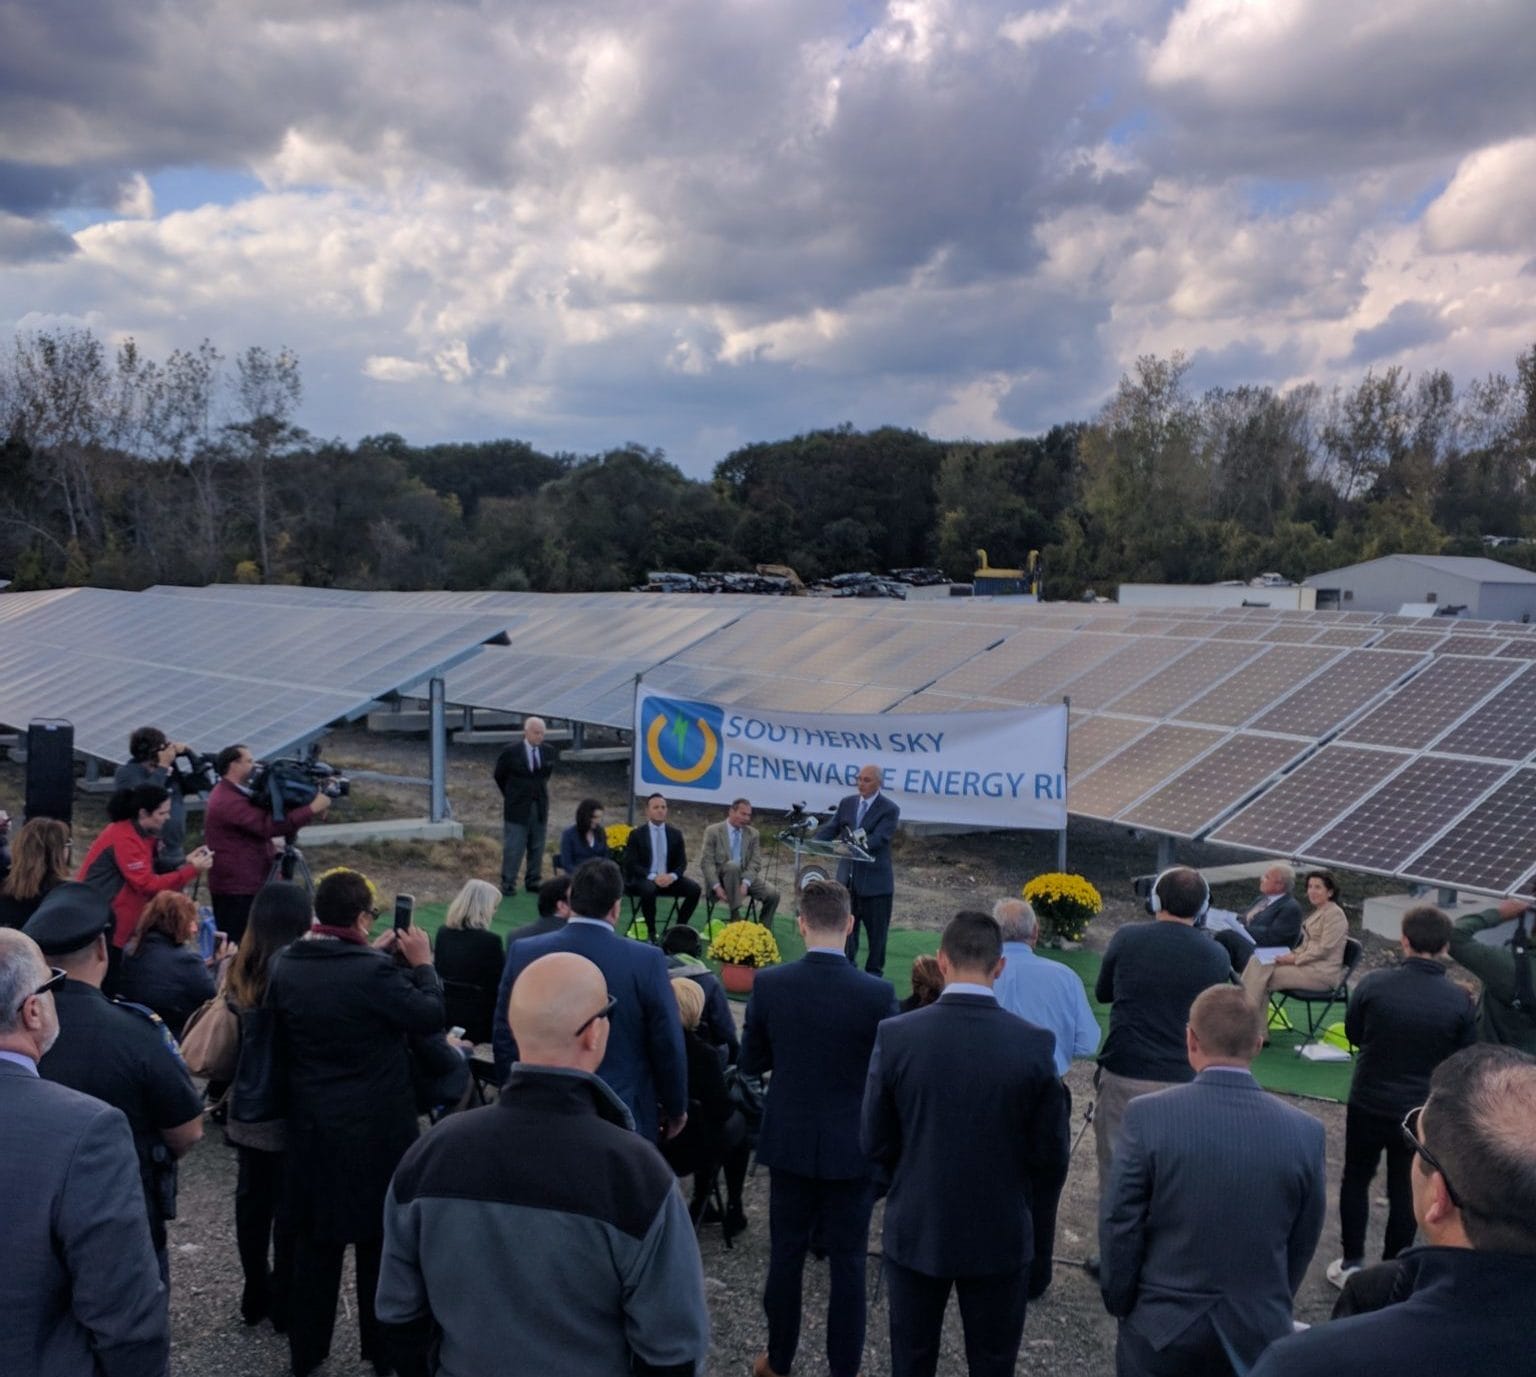 Southern Sky Renewables - Capstone Partners - Rhode Island